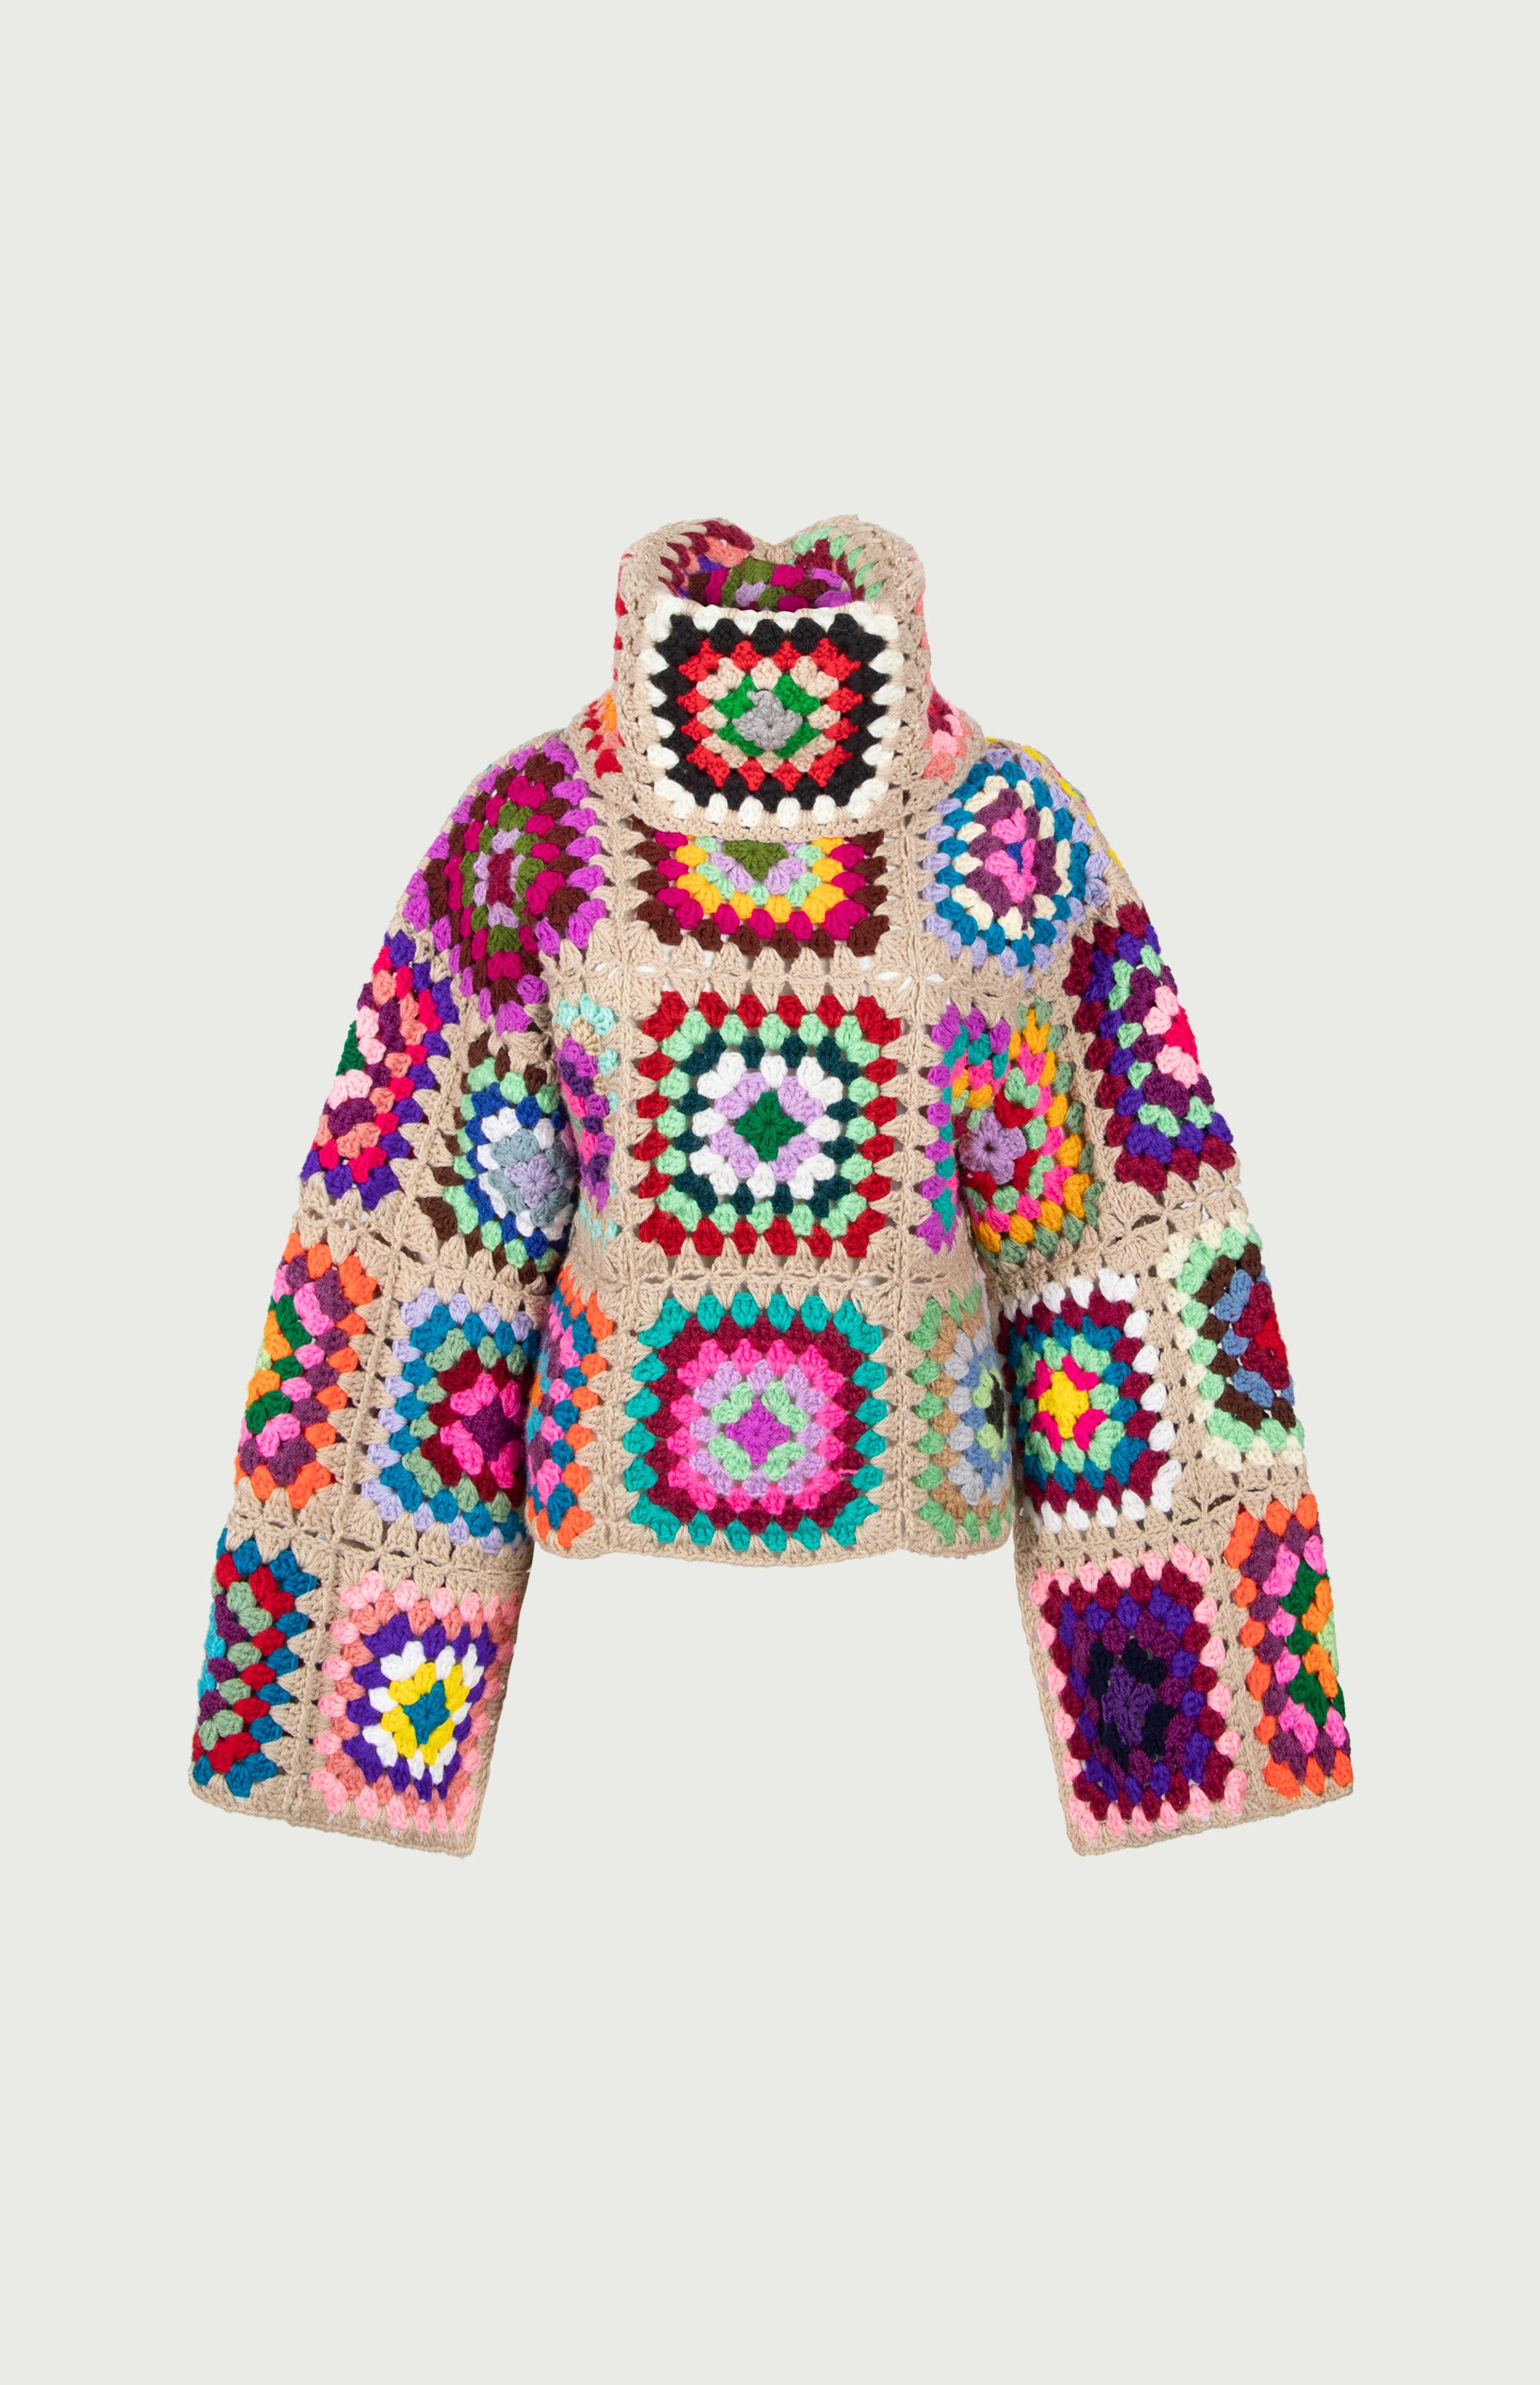 Buy Crochet Top Pattern Long Sleeve Online In India -  India